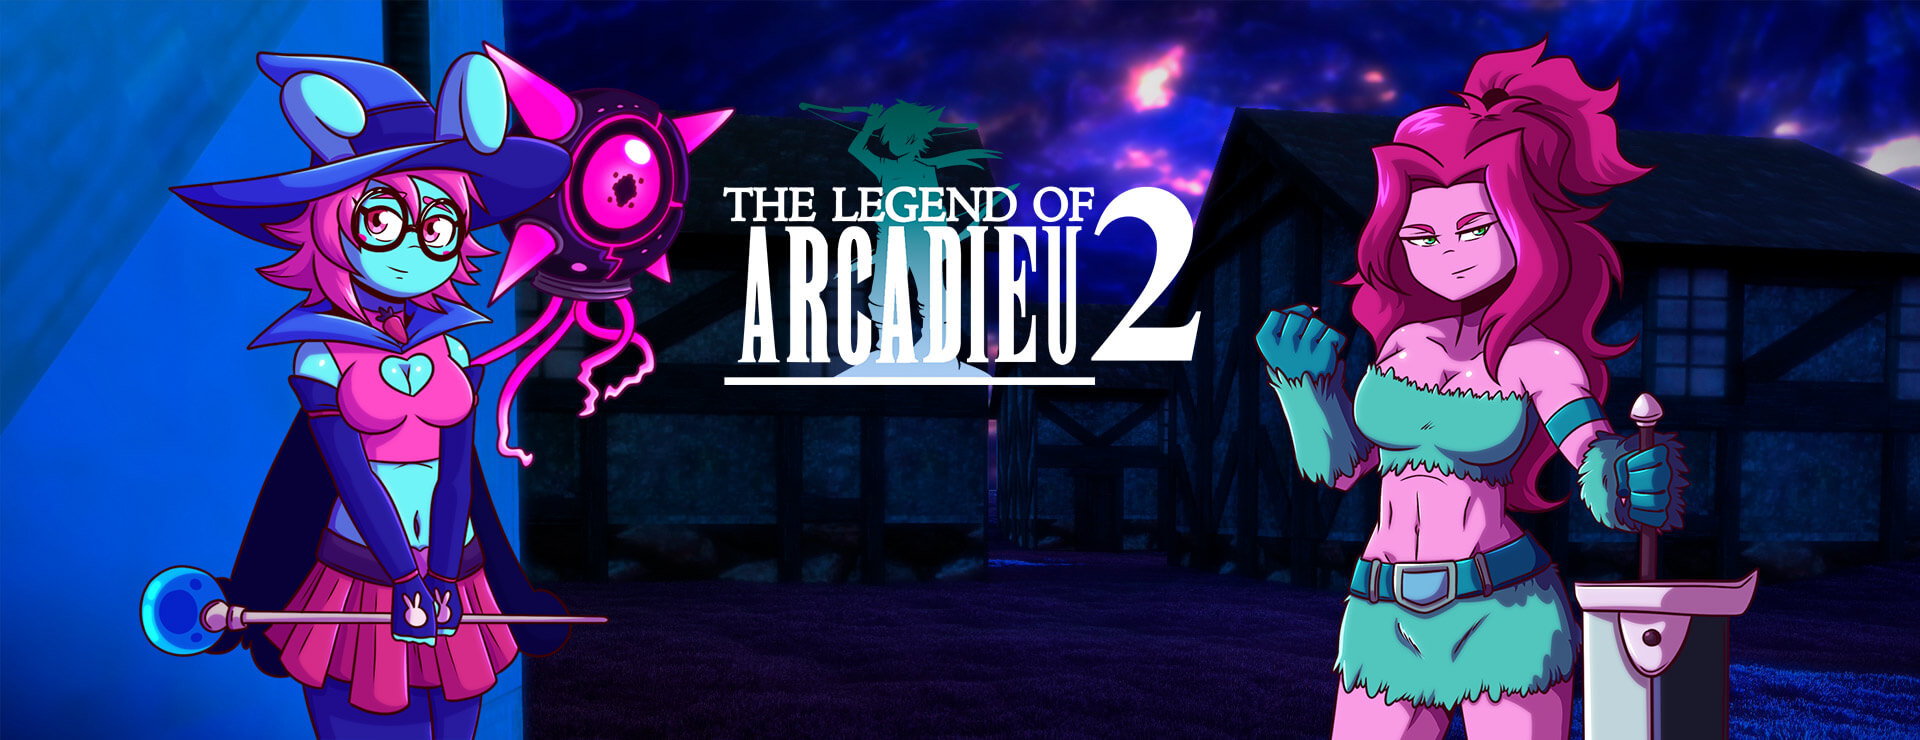 The Legend of Arcadieu 2 - RPG Juego